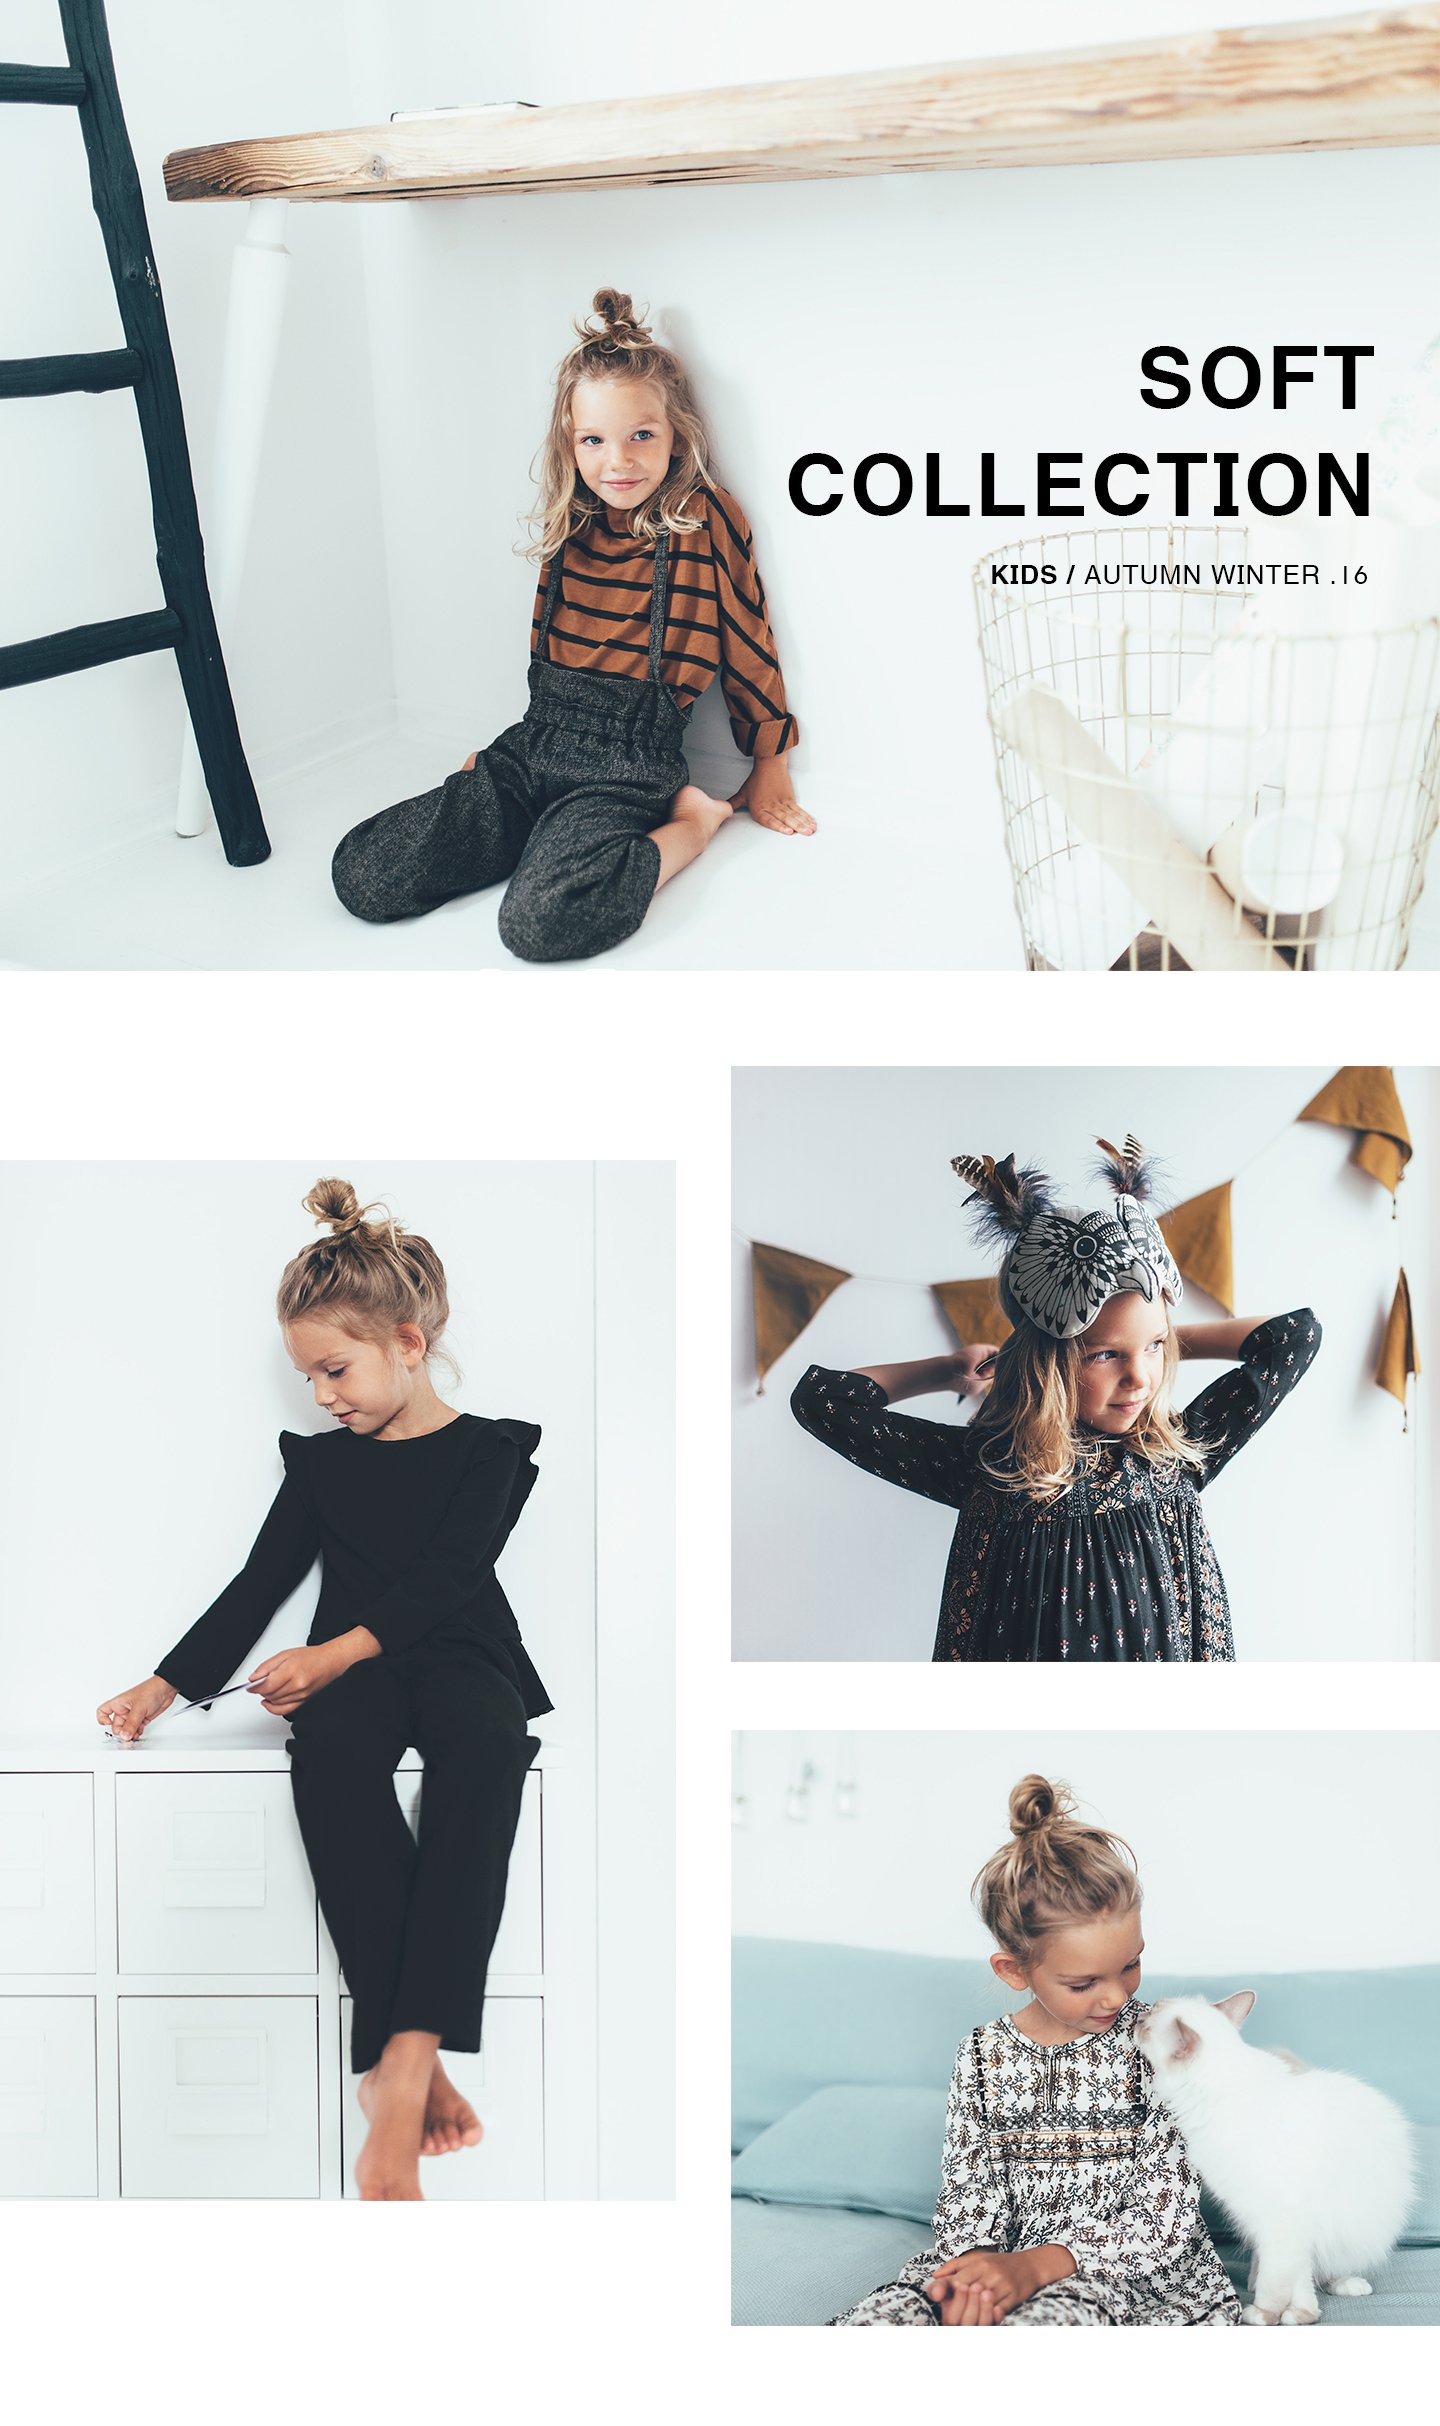 Zara USA: Soft collection | Kids 